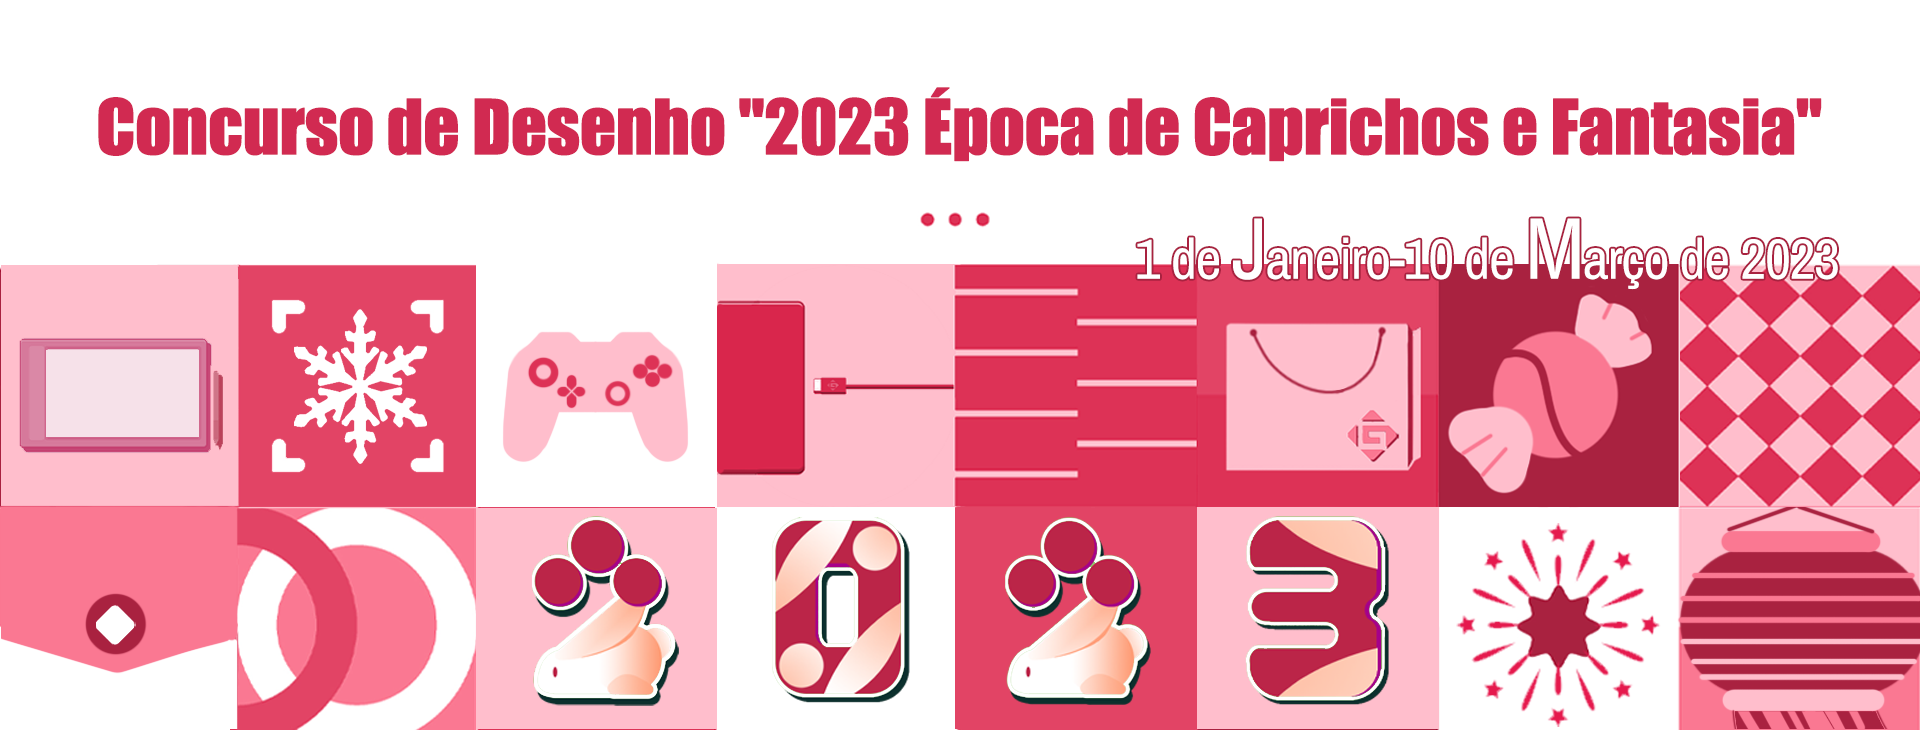 Portuguese_GAOMON Concurso de Desenho “2023 Época de Caprichos e Fantasia”